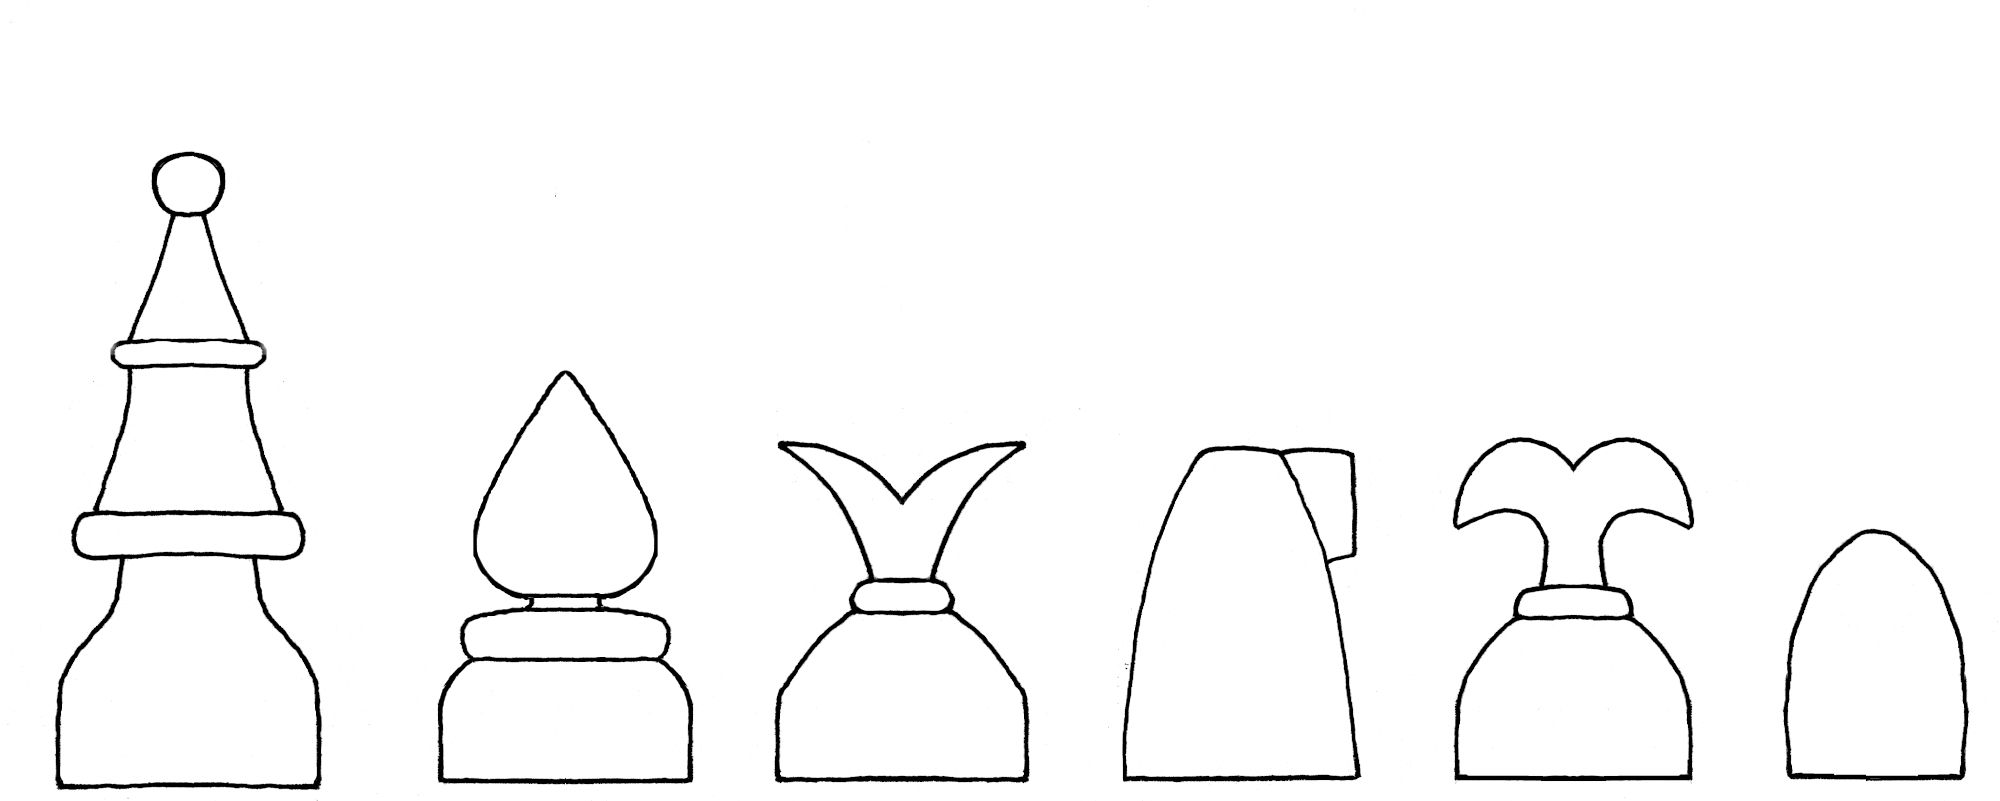 Caxton chess set interpretive diagram